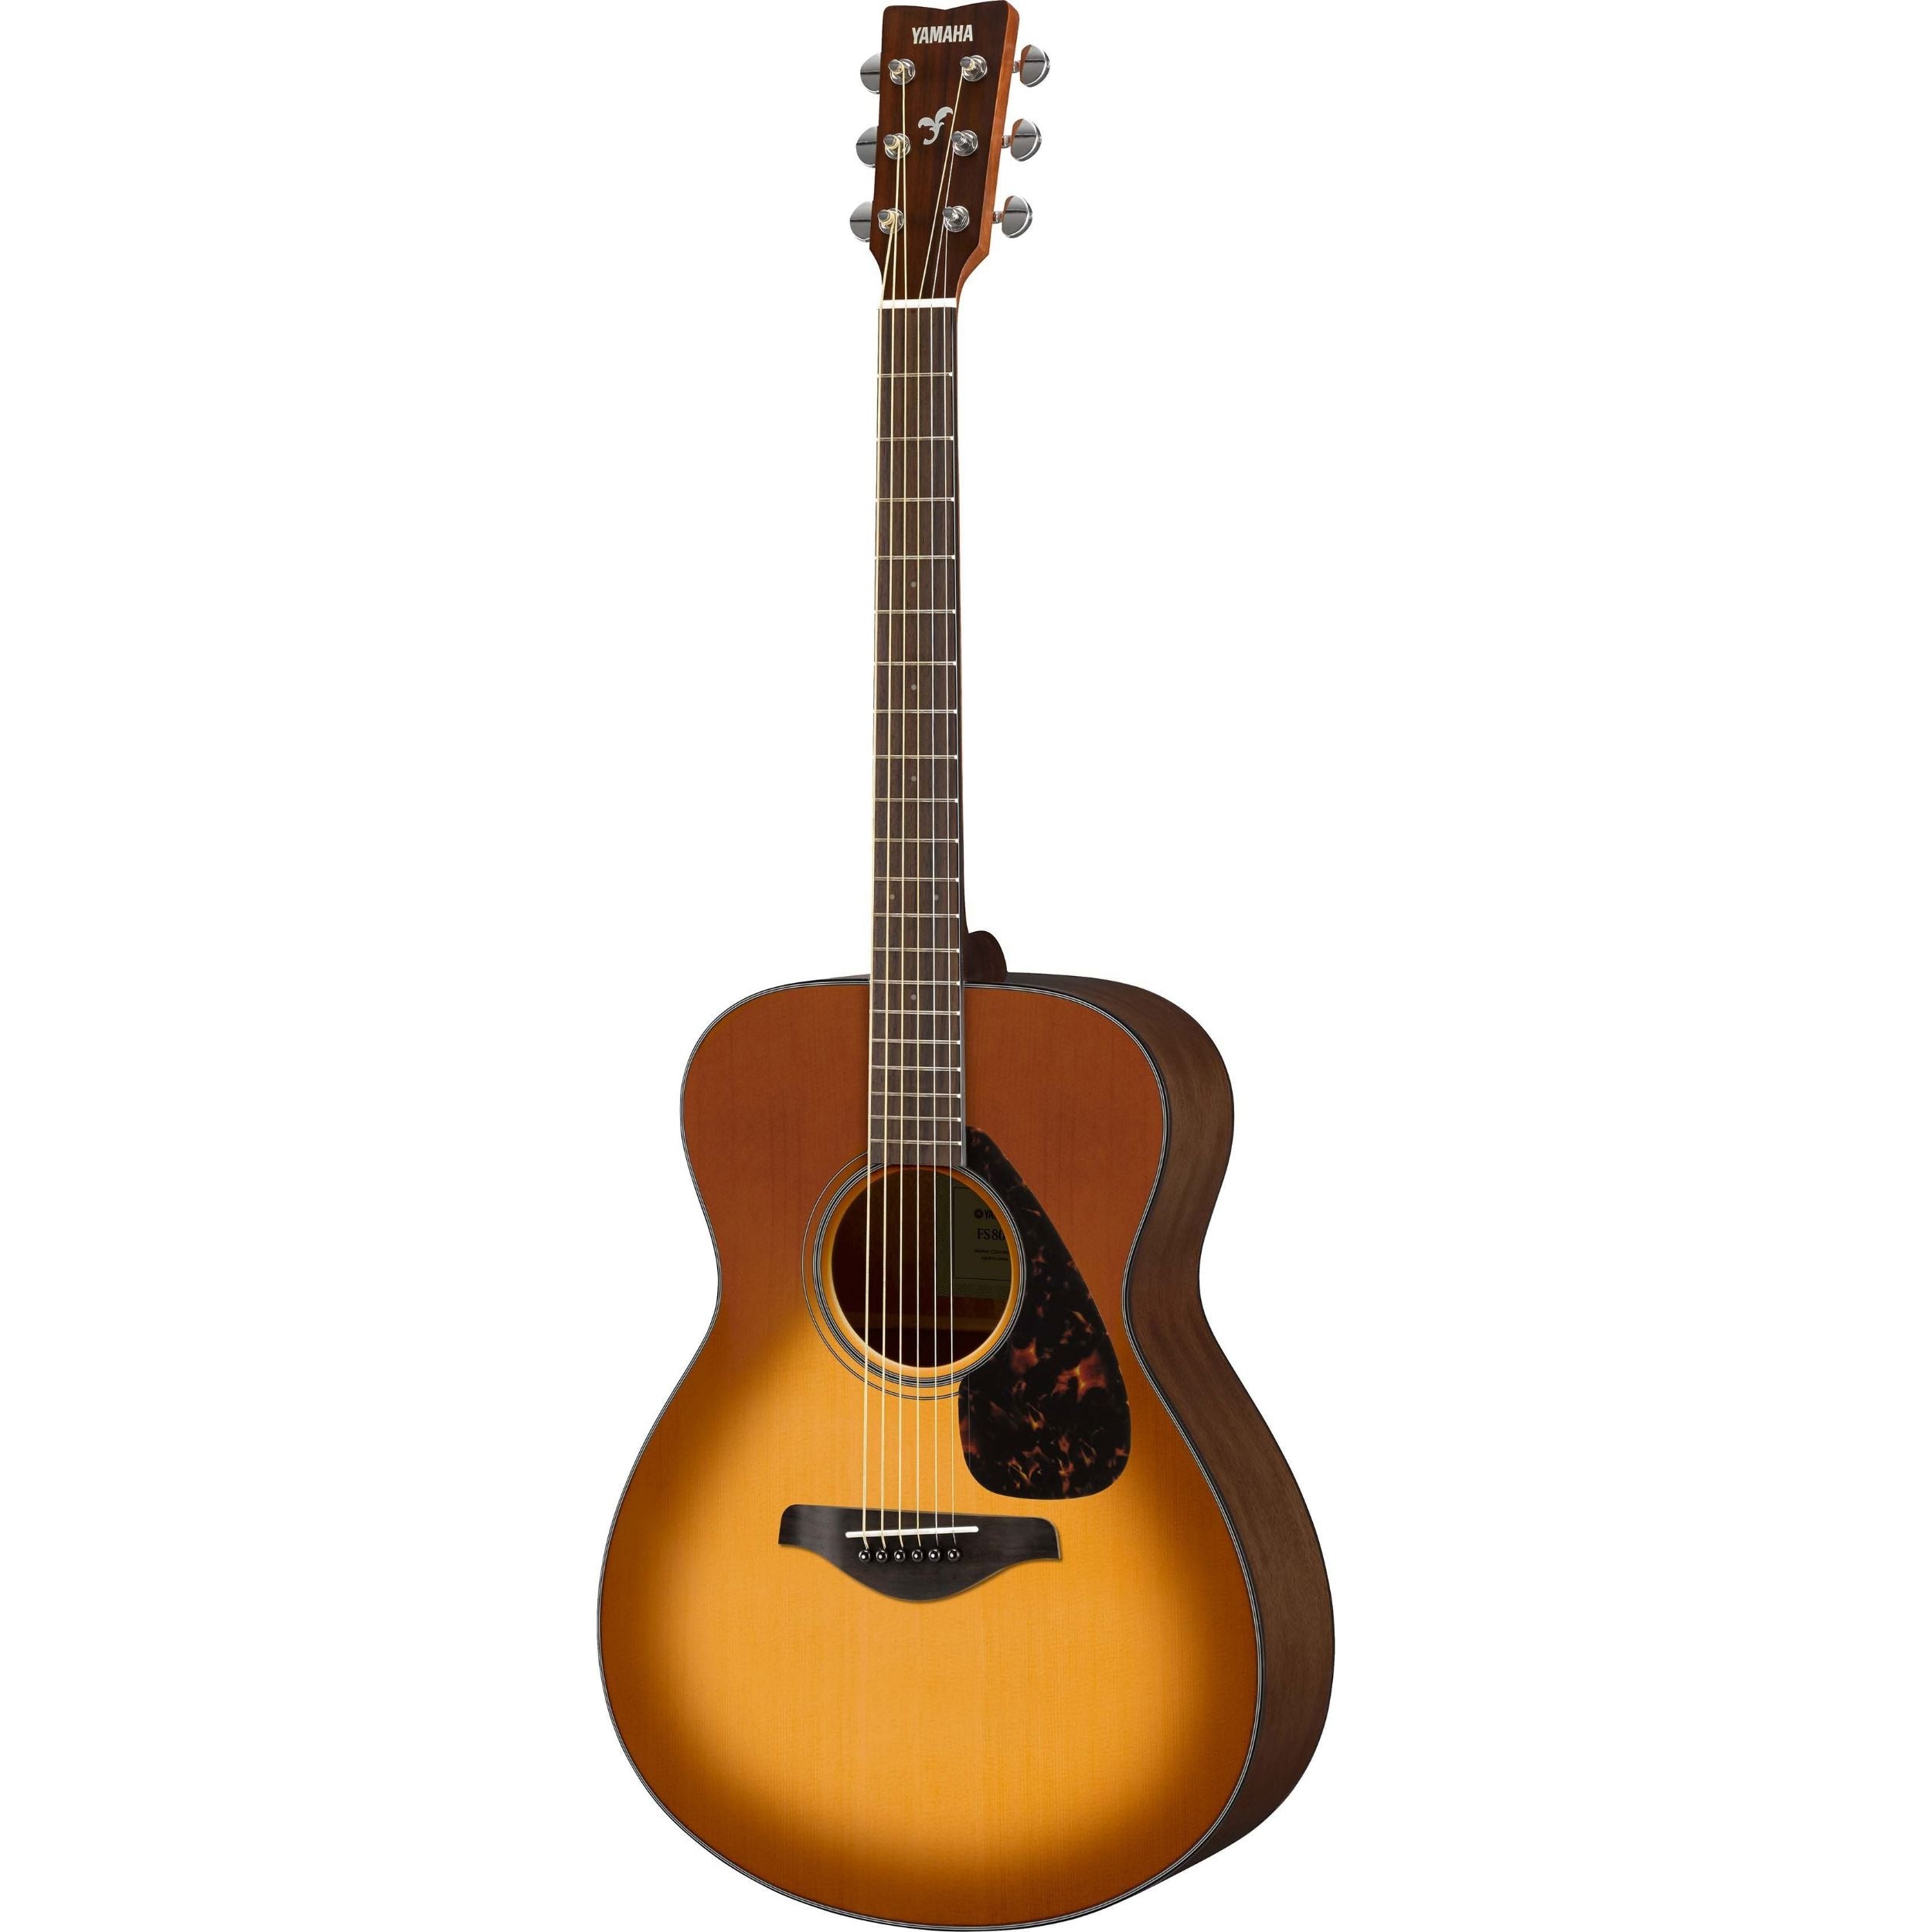 Yamaha FS800 Small Body Acoustic Guitar